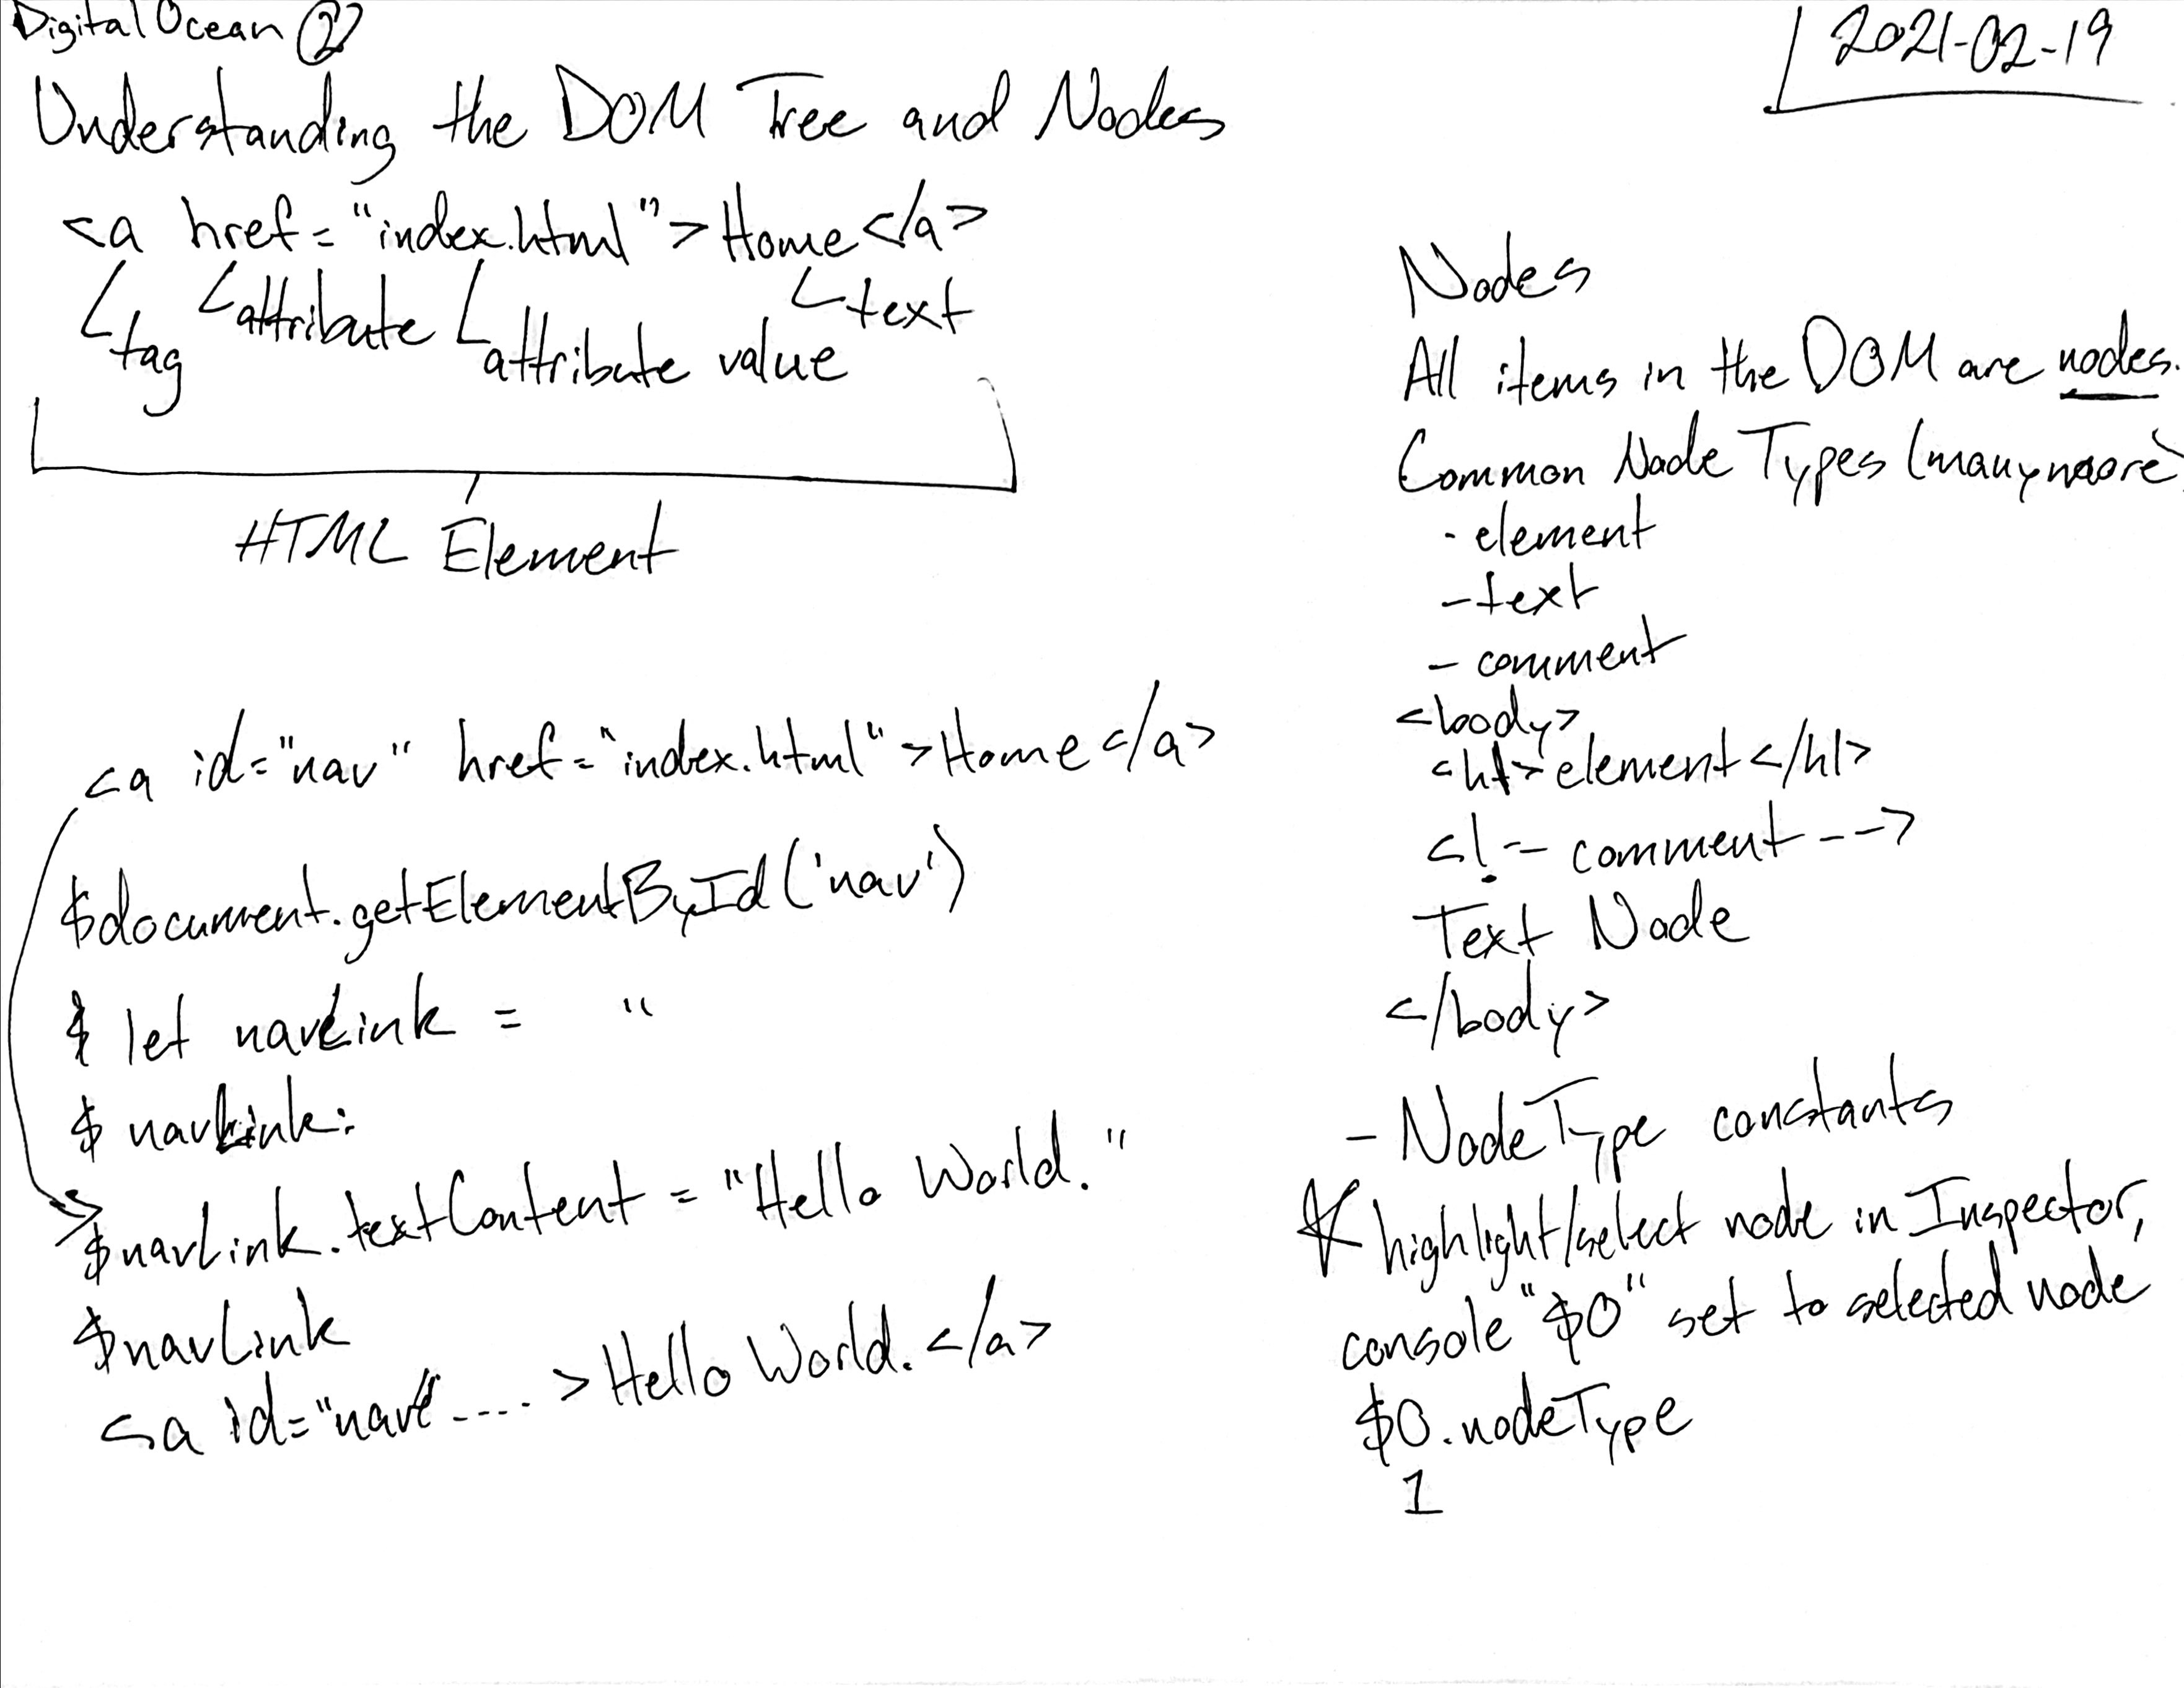 2 understanding dom tree and nodes